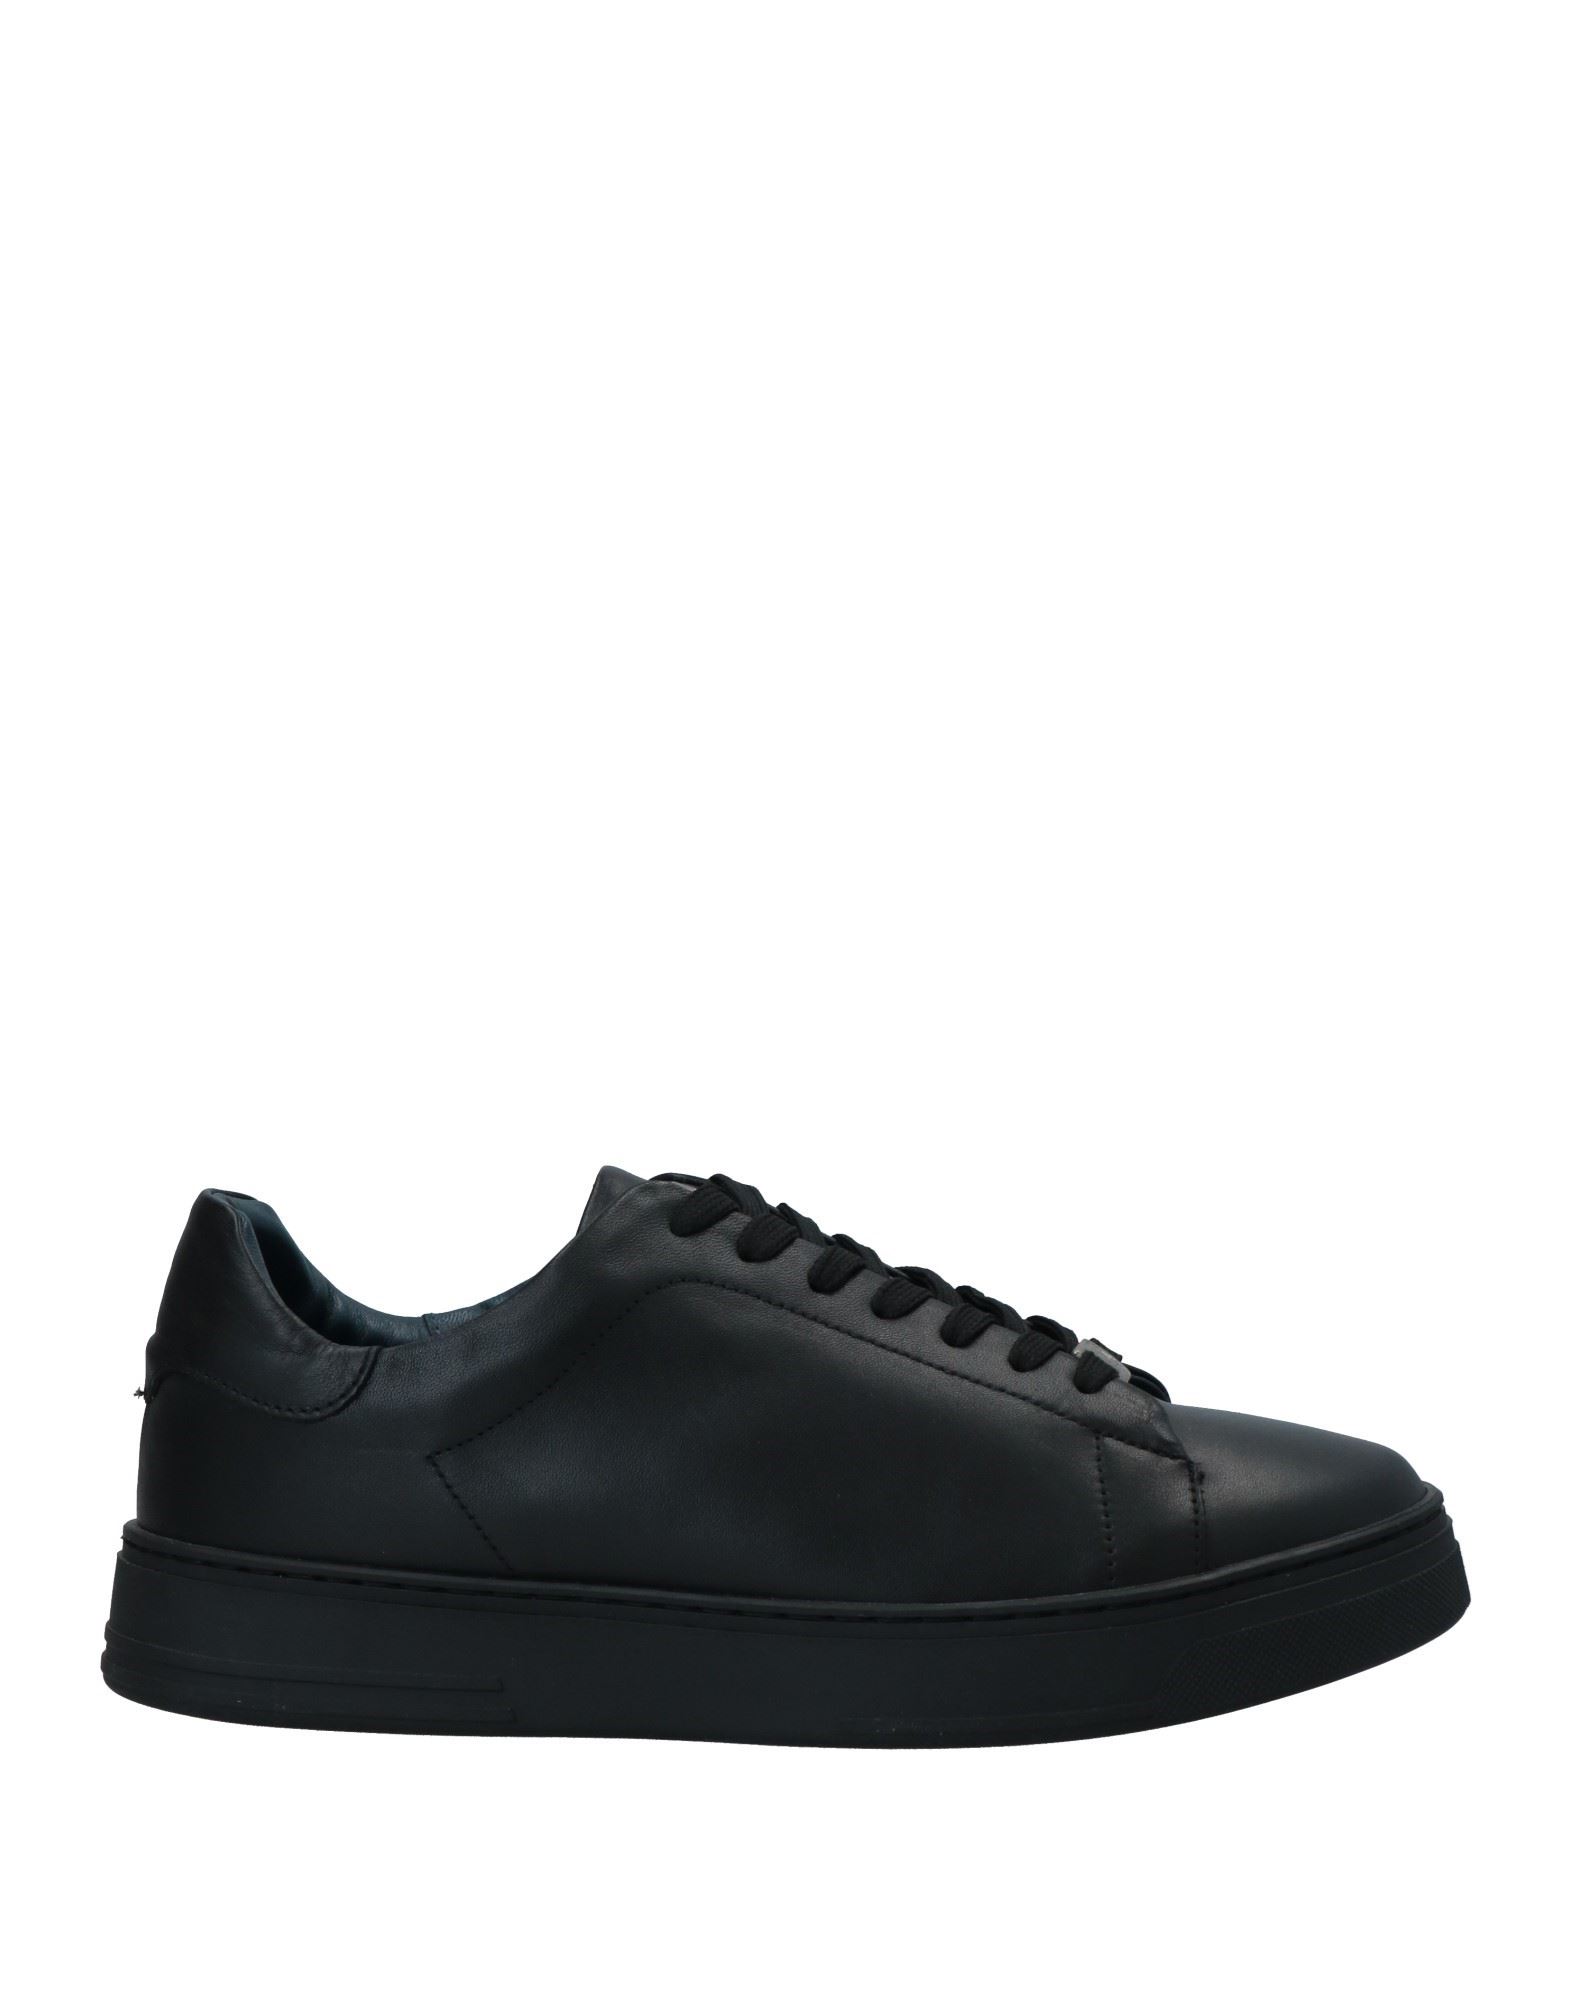 Marechiaro 1962 Sneakers In Black